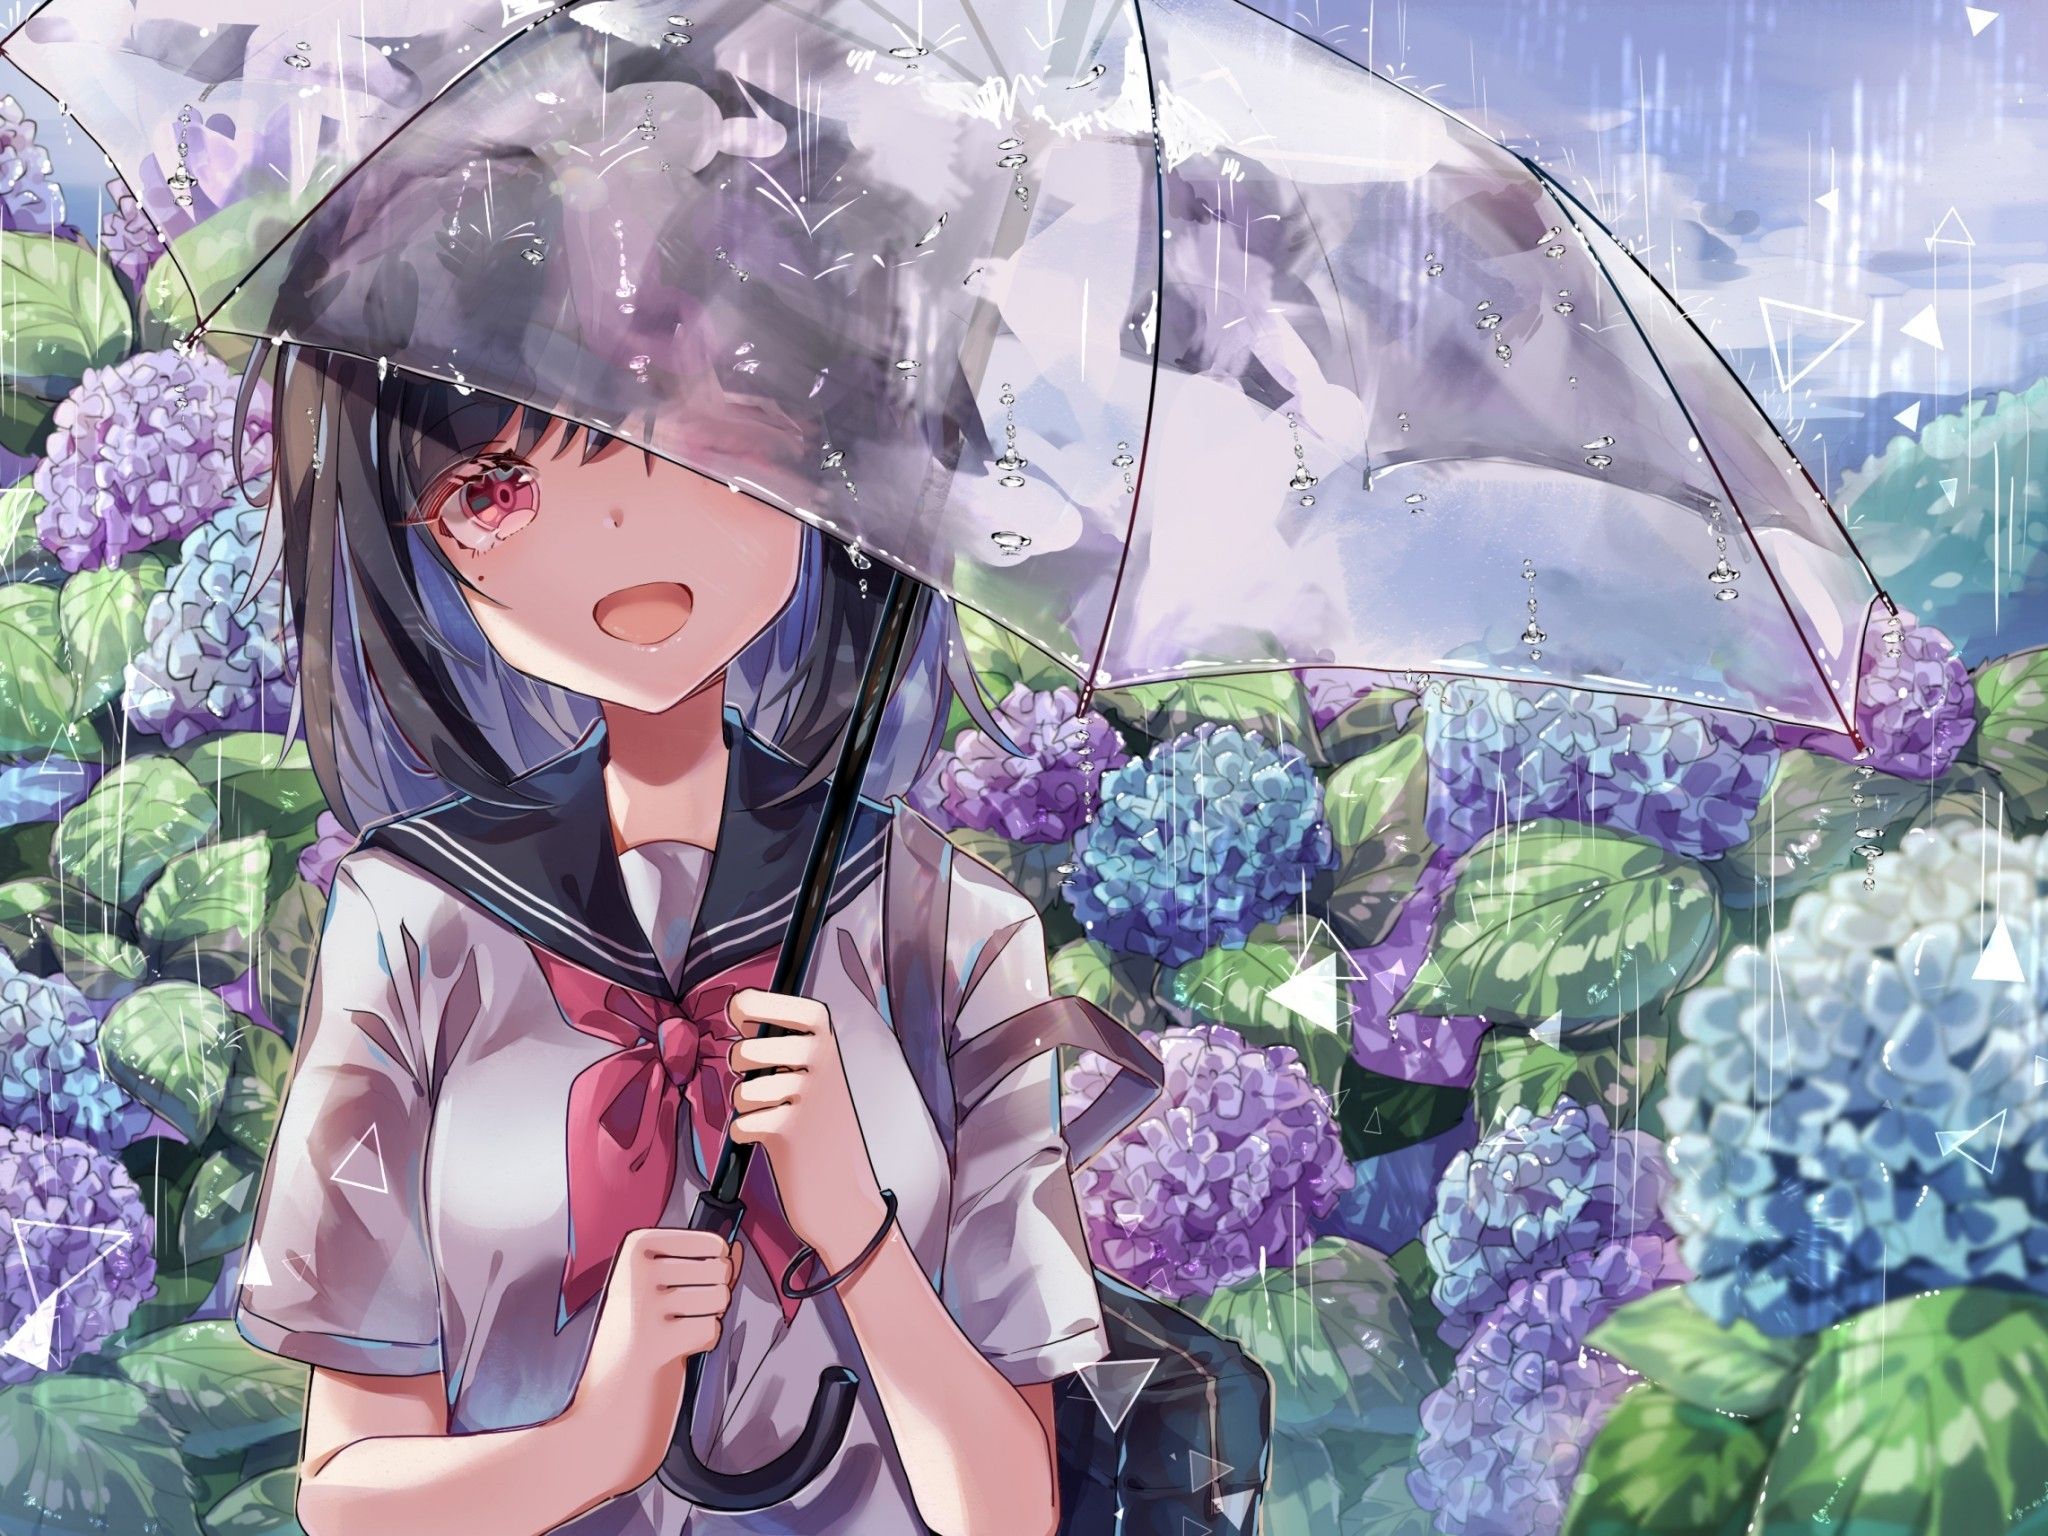 Download 2048x1536 Anime School Girl, Transparent Umbrella, Raining, Colorful Flowers Wallpaper for Ainol Novo 9 Spark